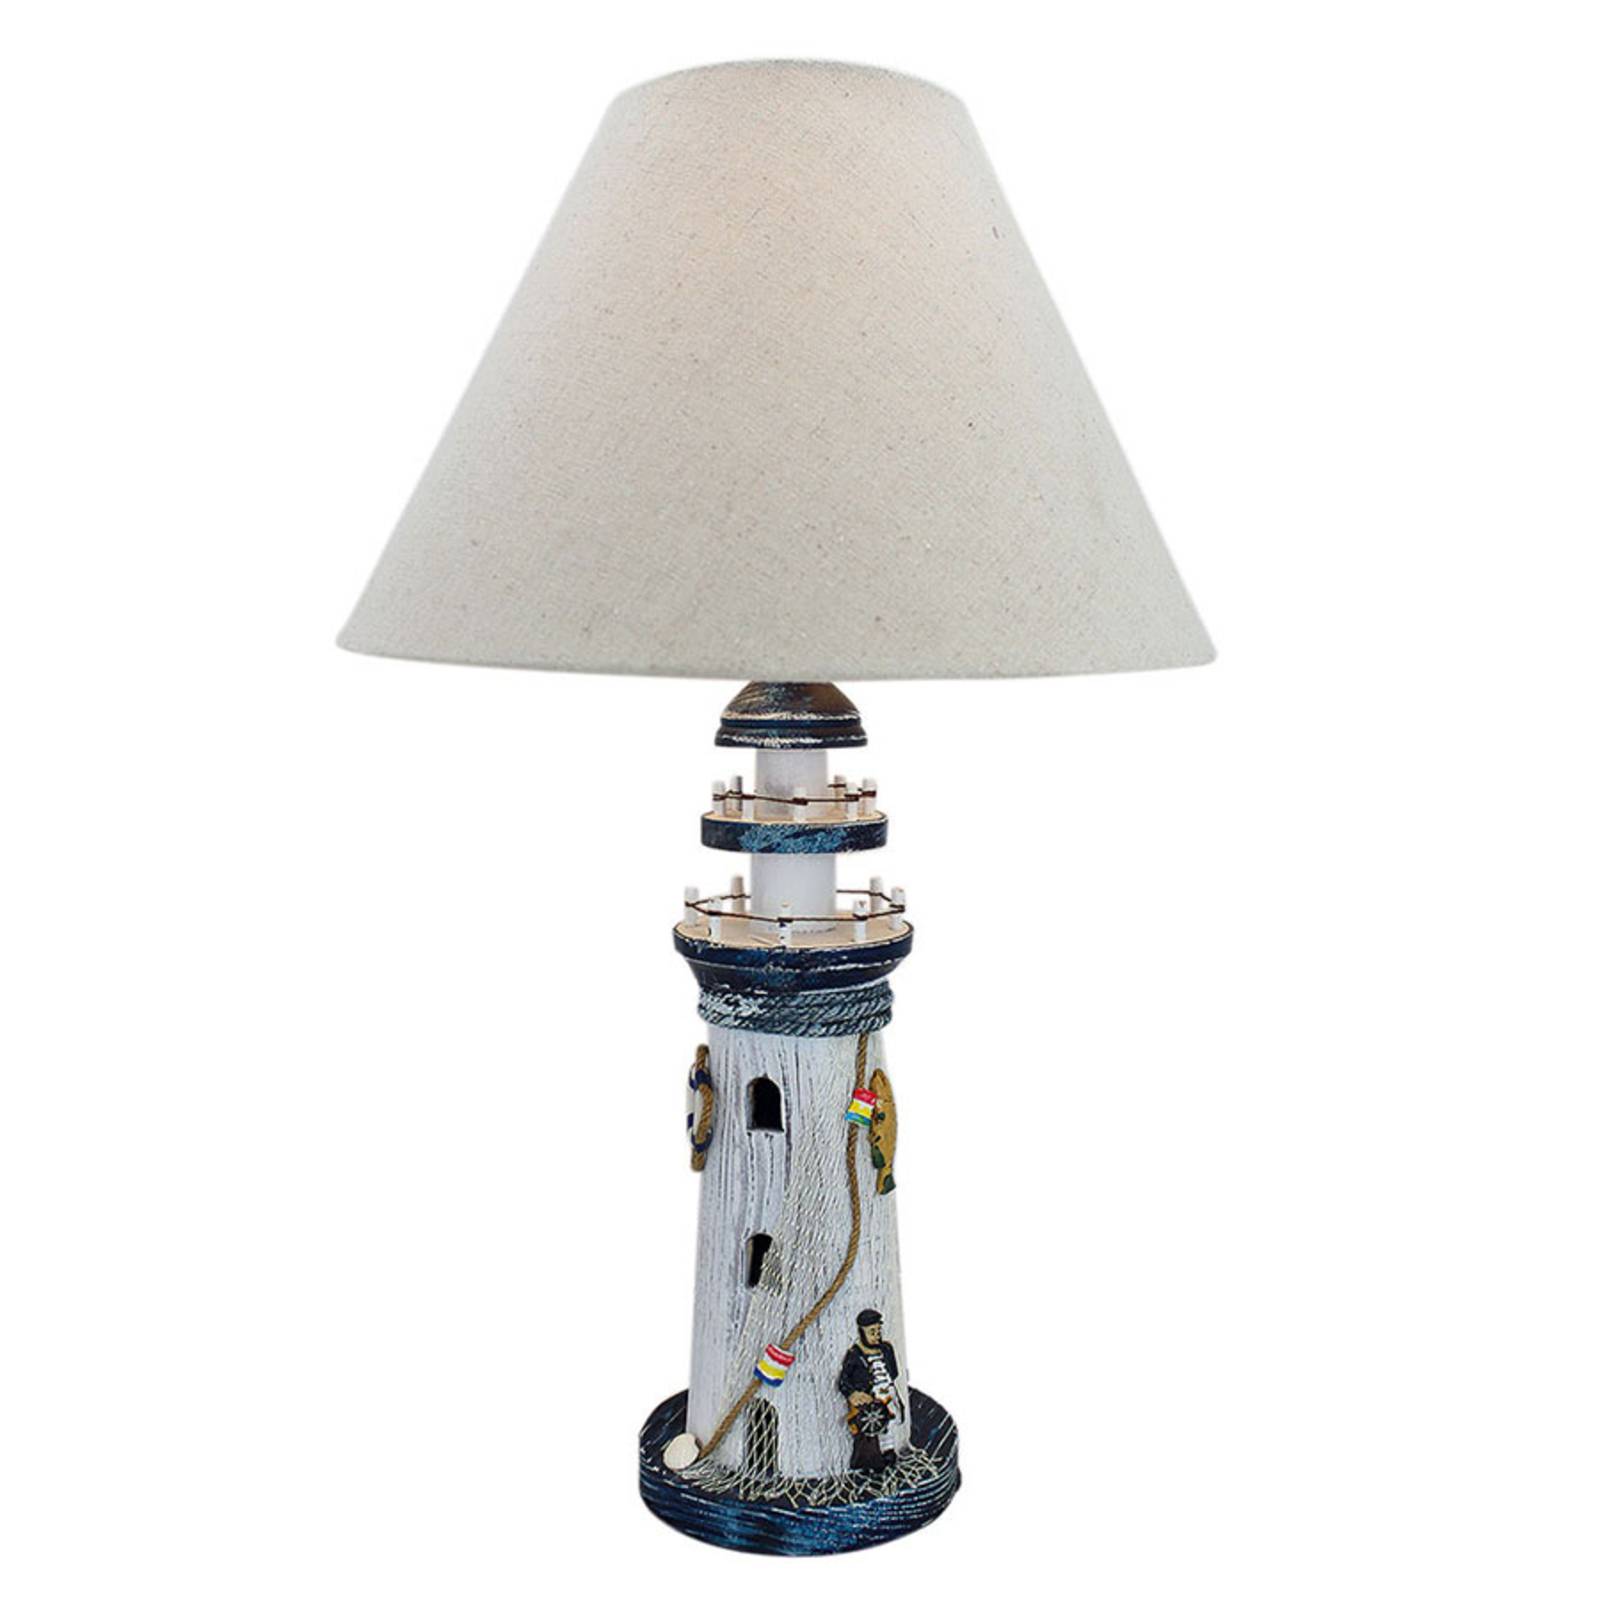 Image of Lampe à poser 5760 tour lumineuse abat-jour tissu 4250815515176